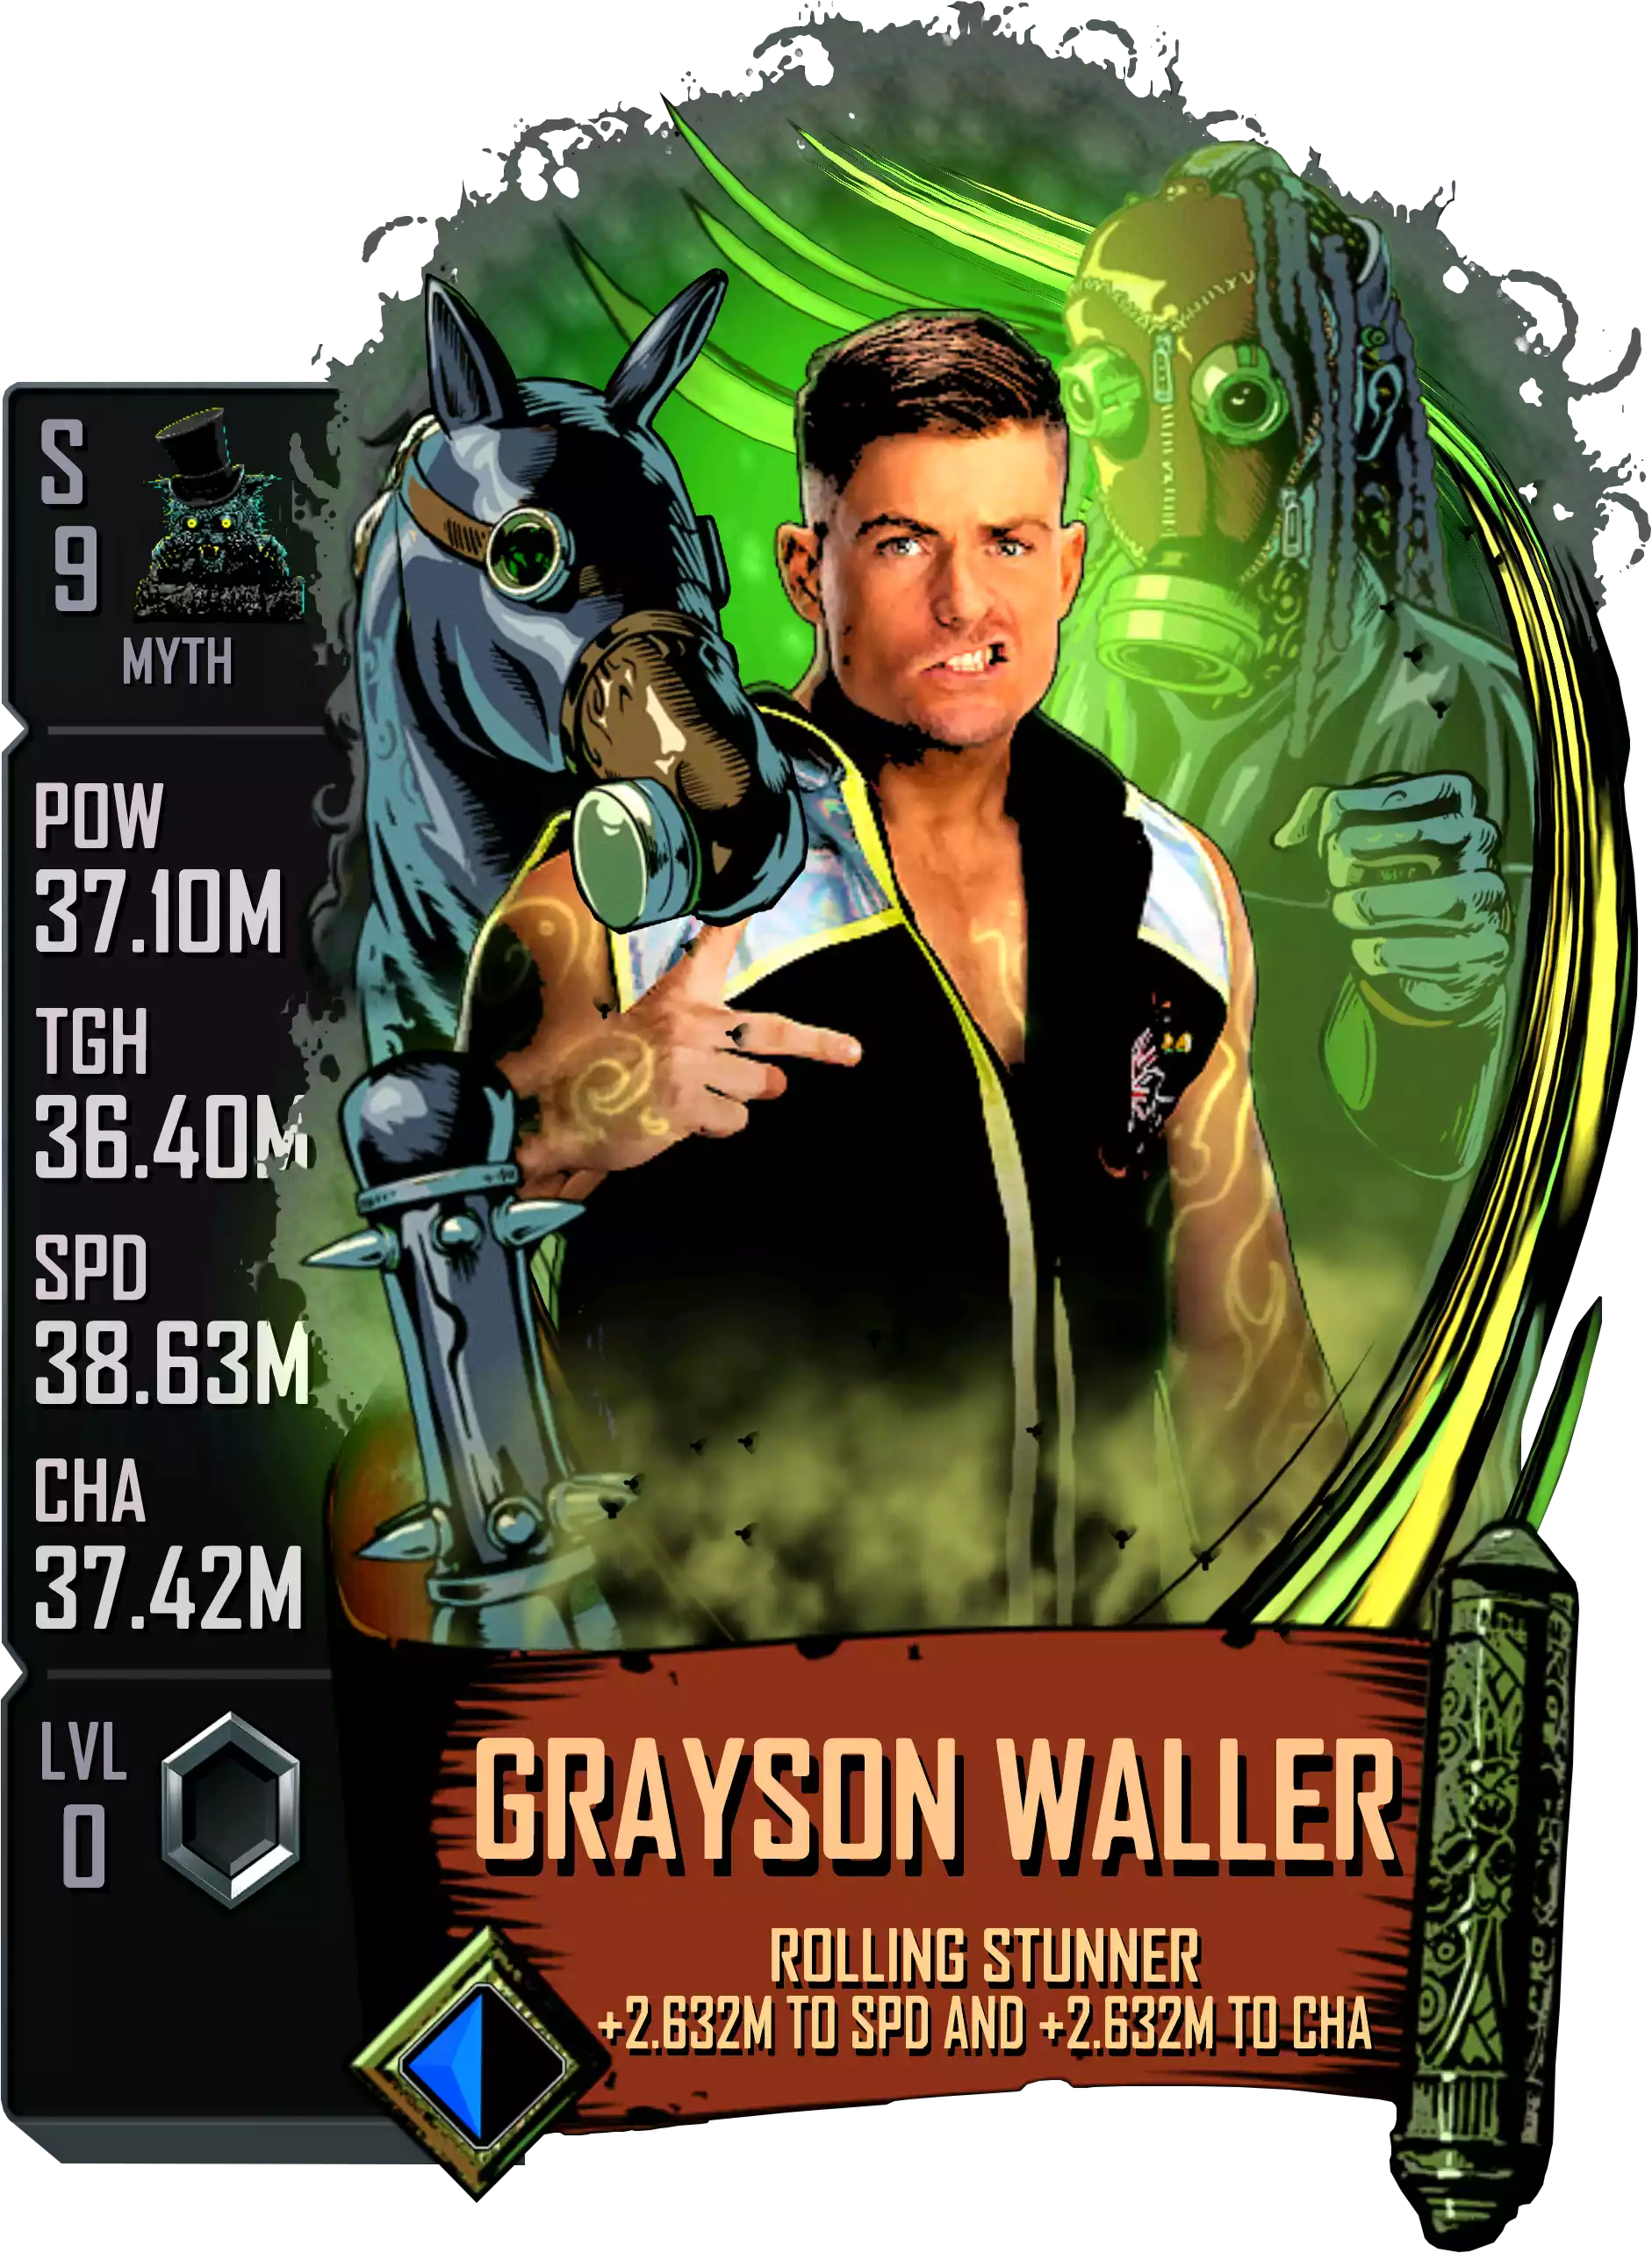 Myth - Grayson Waller Special Seasonal Halloween Card from WWE Supercard